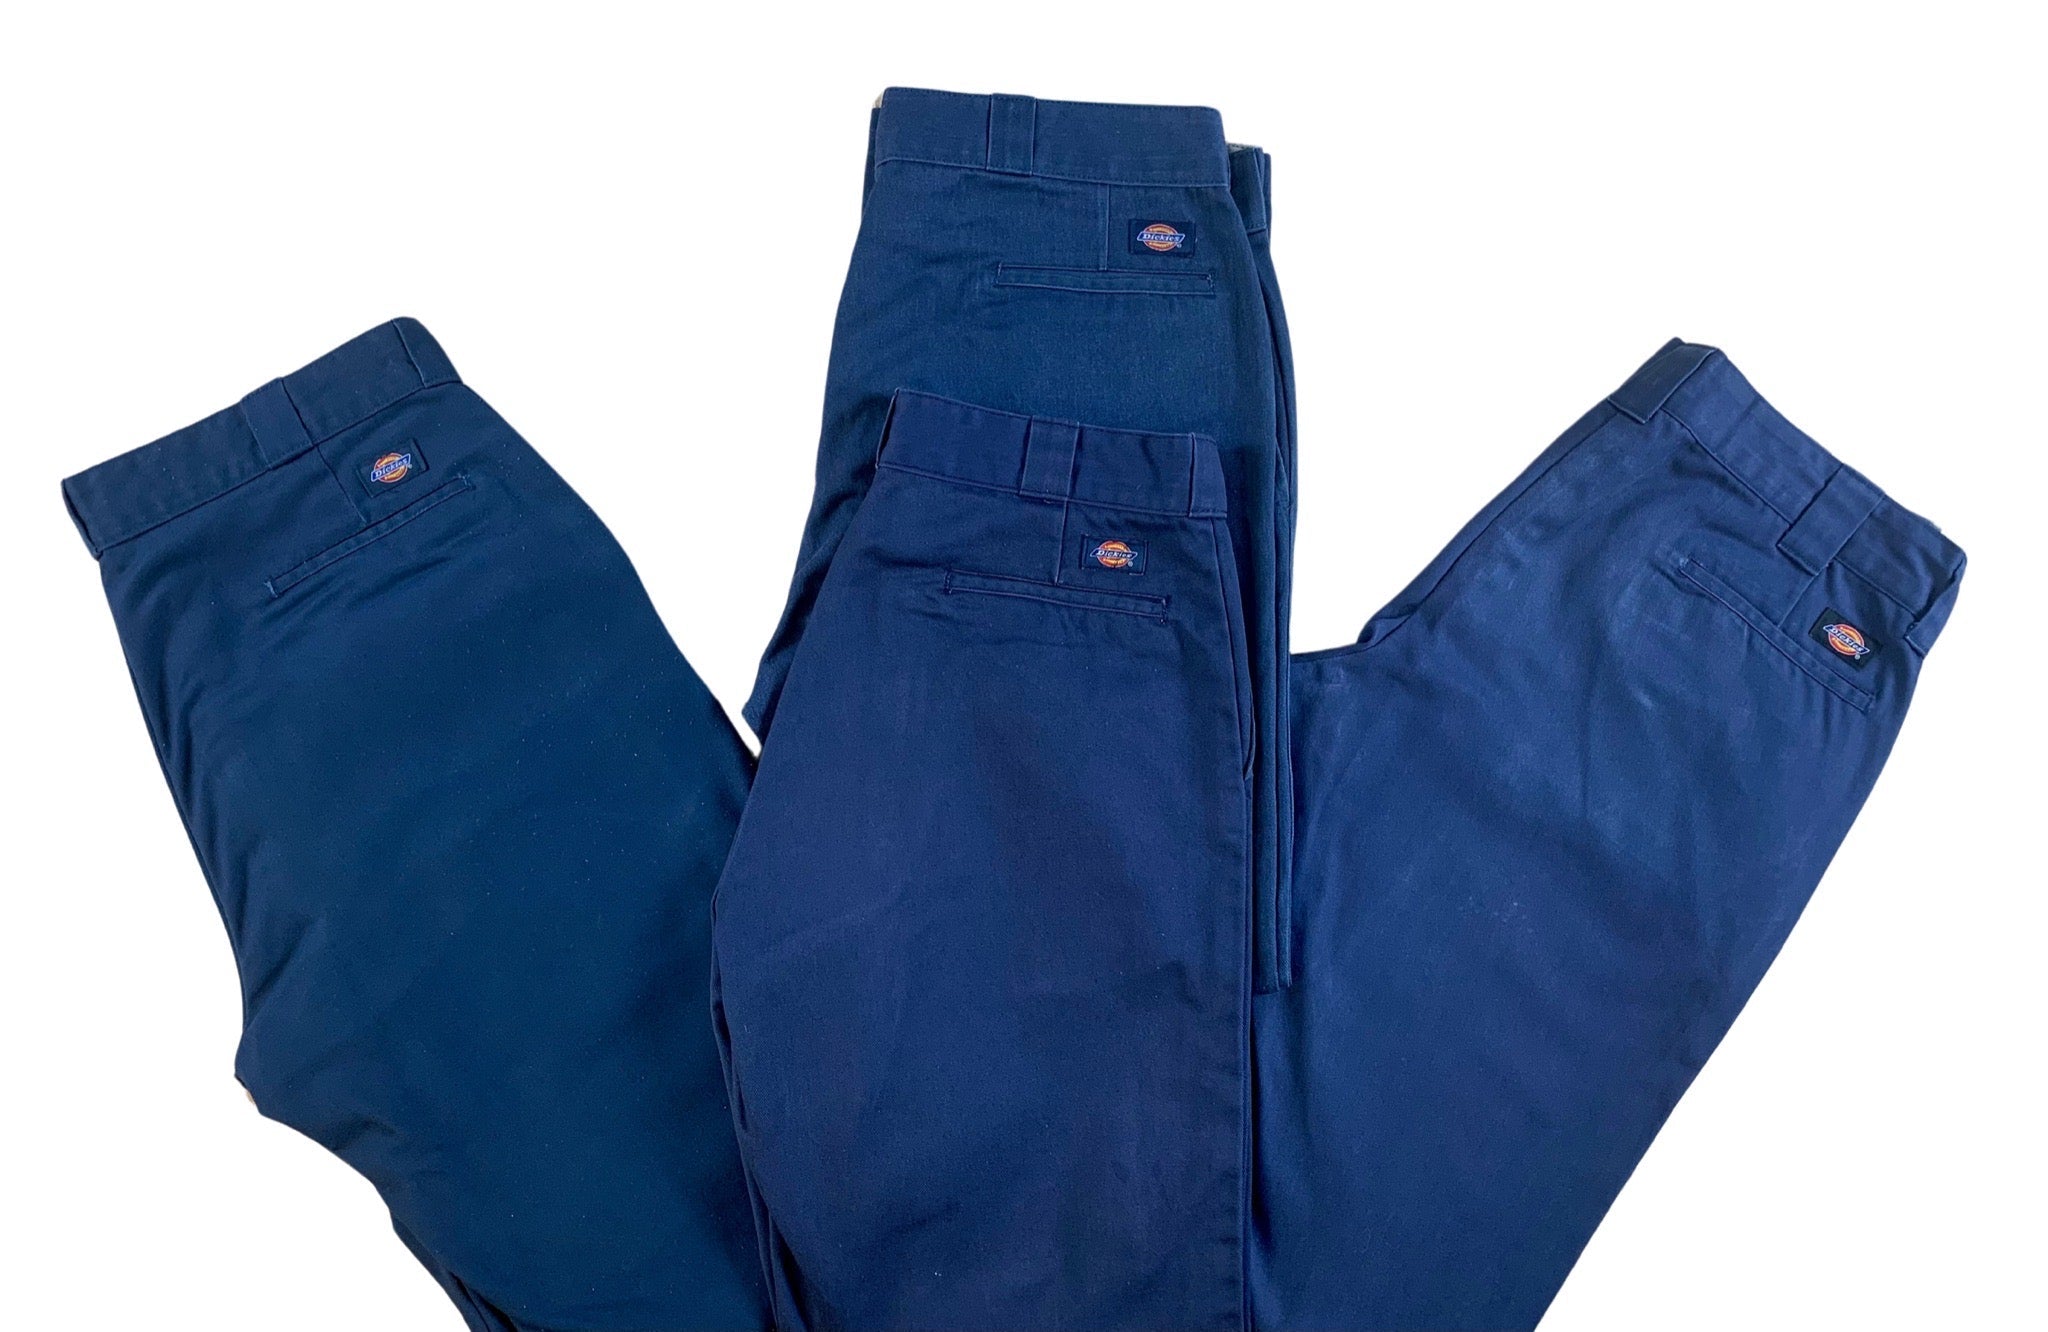 1x Vintage DICKIES Navy Blue Straight Leg Trousers - Waist 32 - Length 30 - Vintage Superstore Online